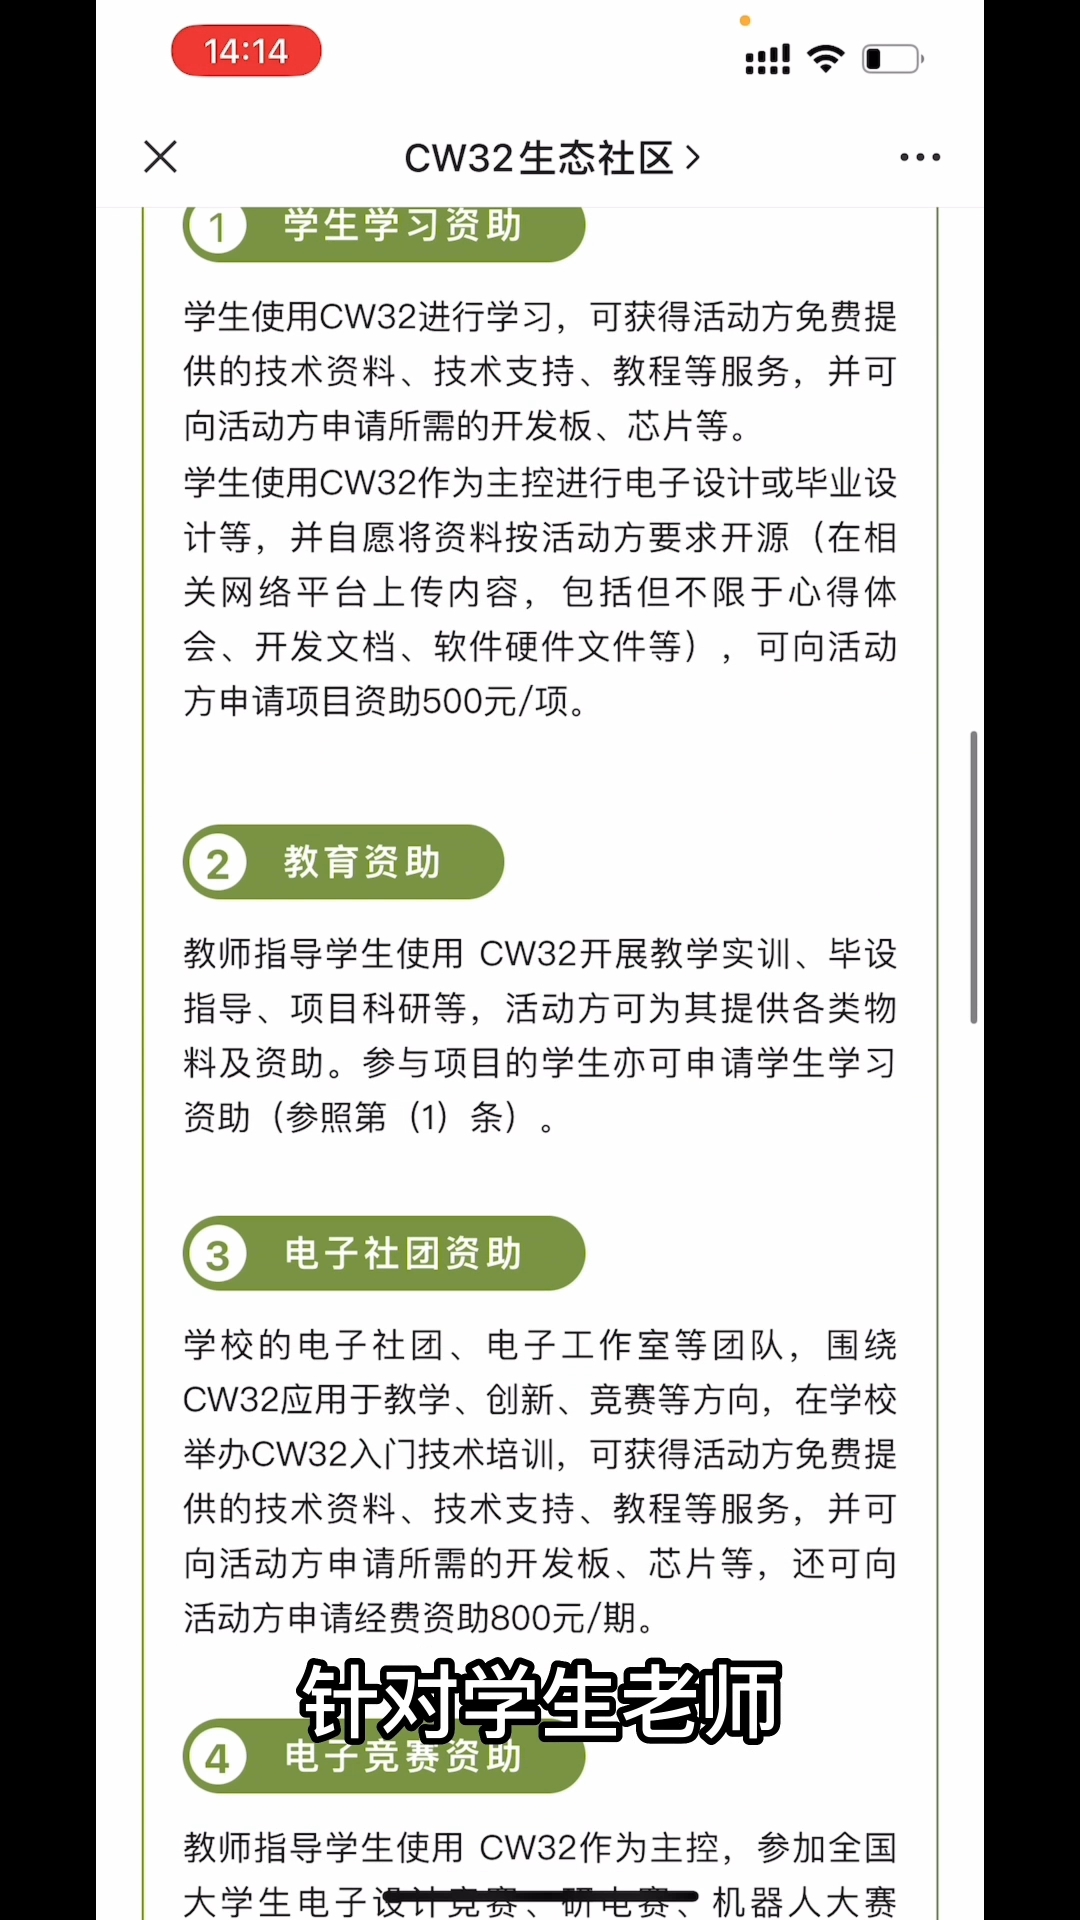 CW32开发者扶持计划#CW32 #芯片 